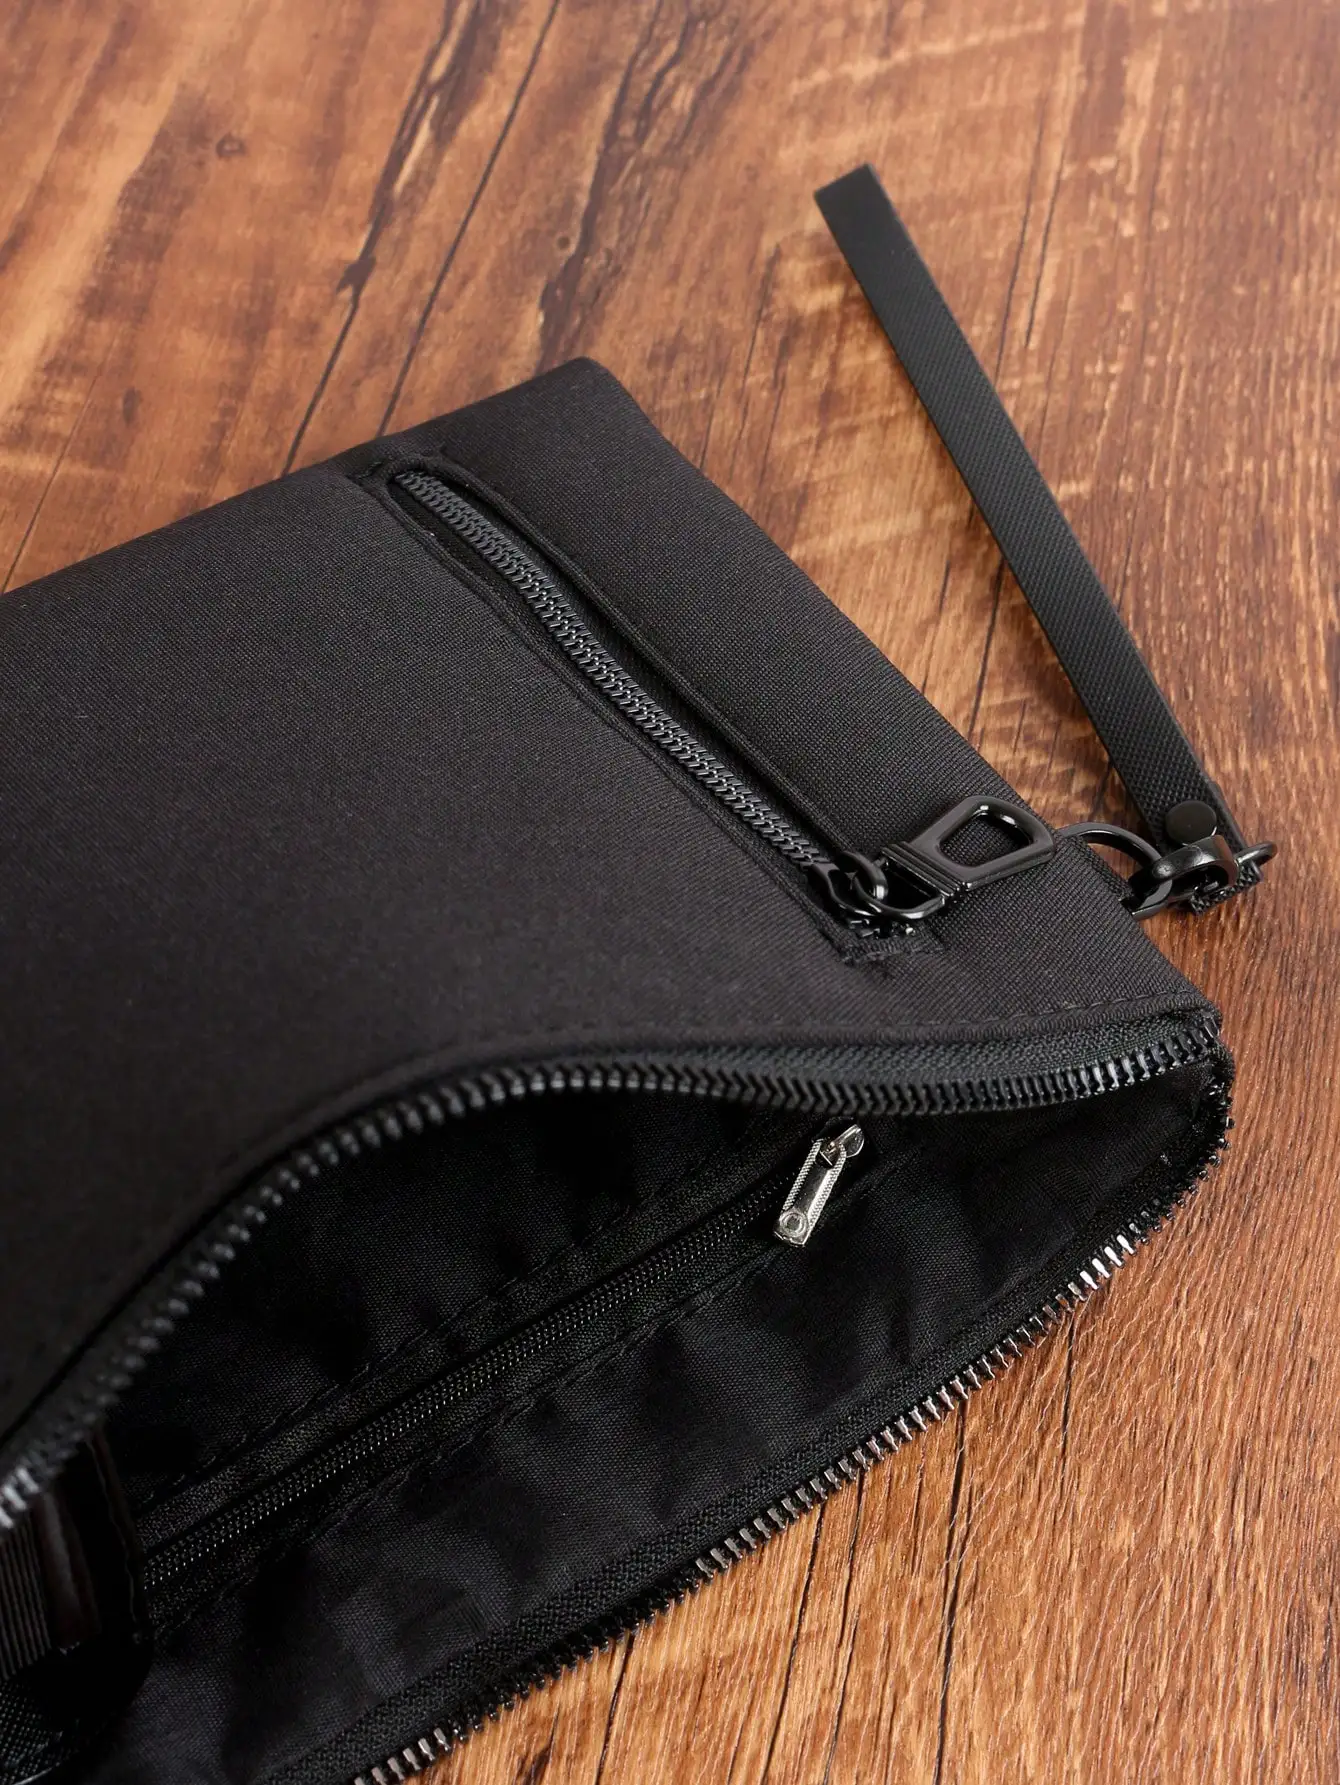 Business Simple Bag Fashion Casual Ultra-Thin Portable Zipper Wristlet Bag Cell Phone Bag Handbag Armpit Bag Men's Clutch Bag